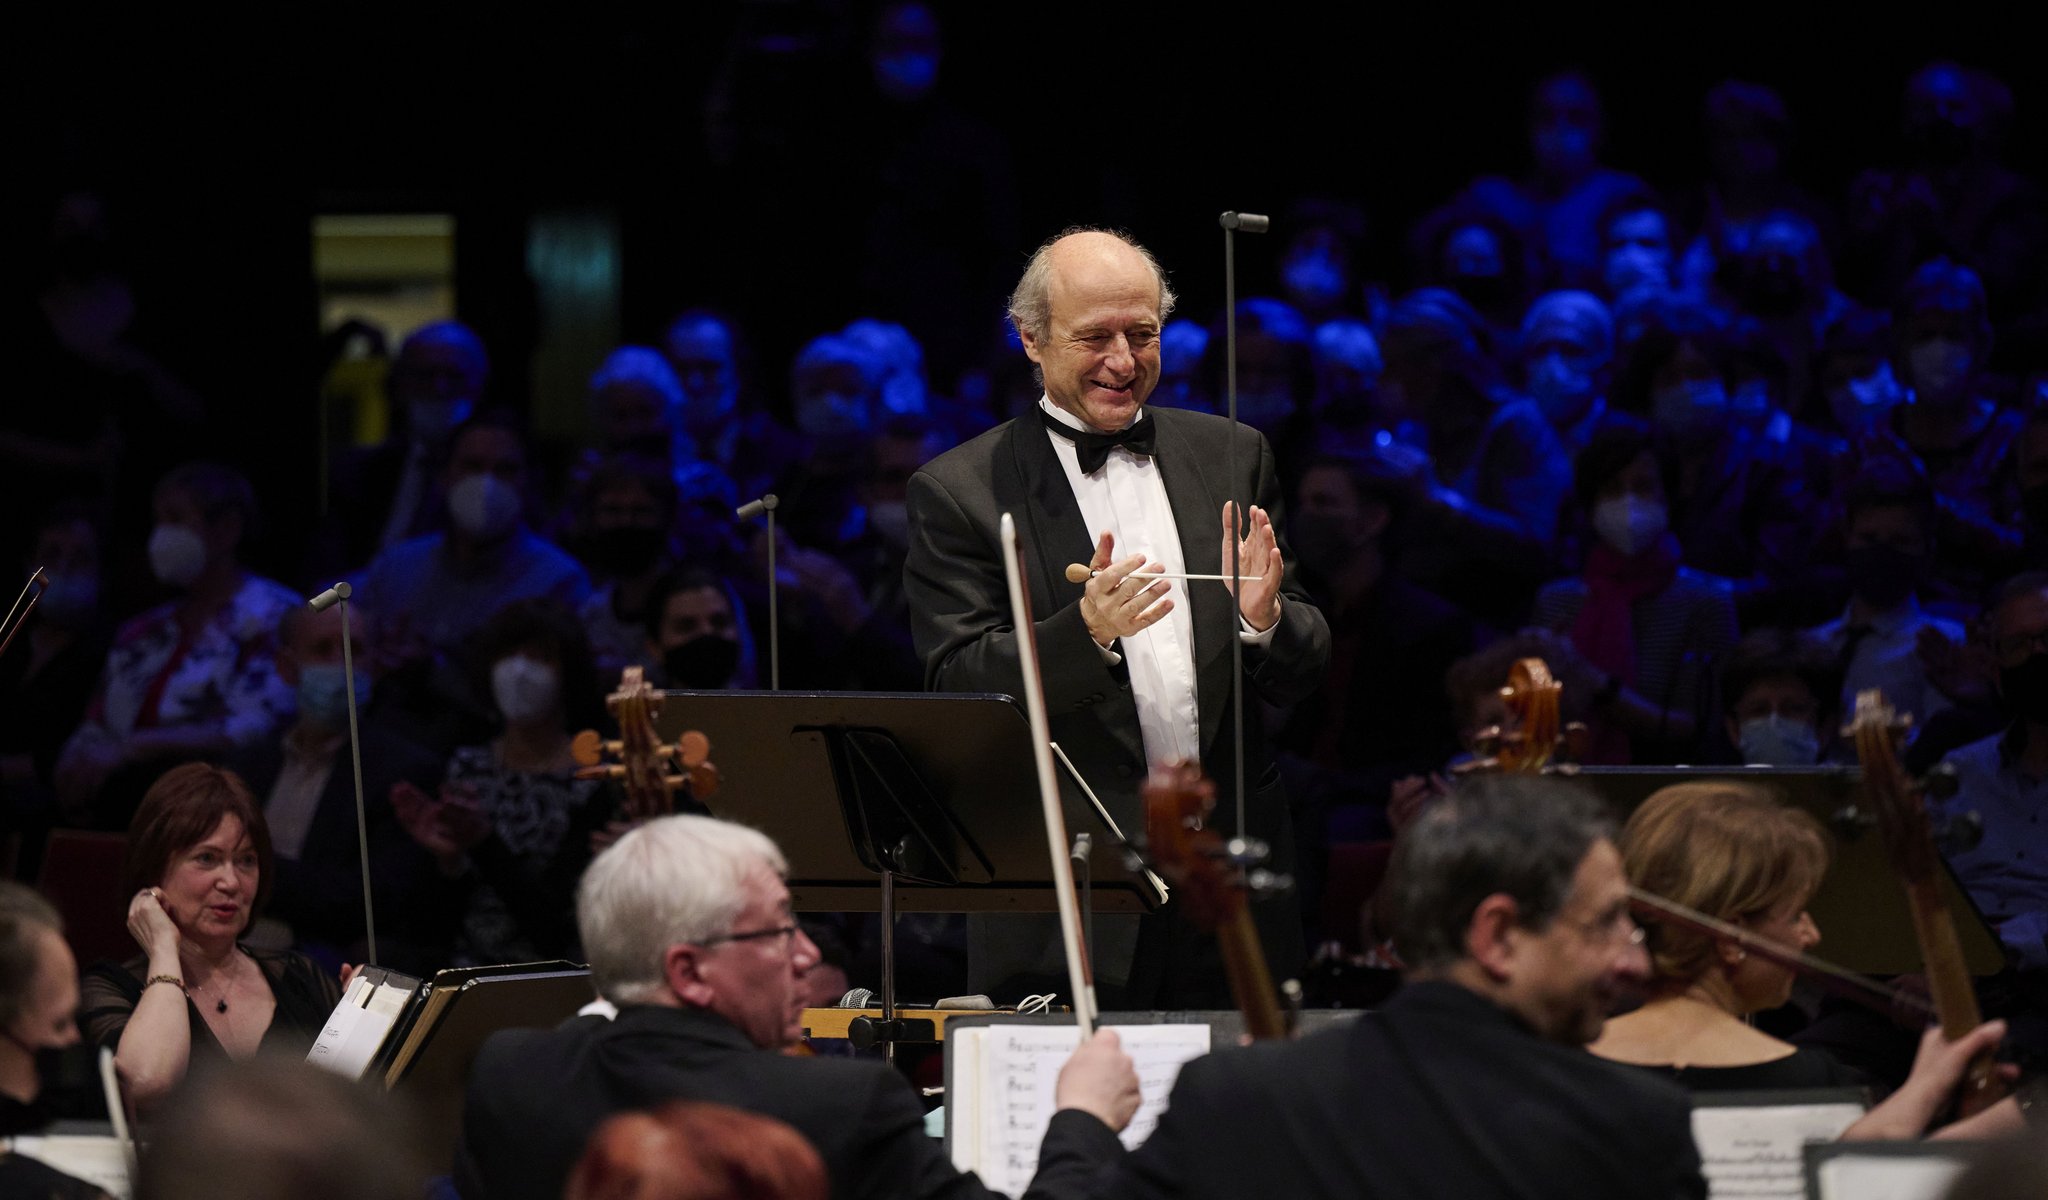 Surprize Concert by Festival Orchestra, Budapest Congress Center, 26 December